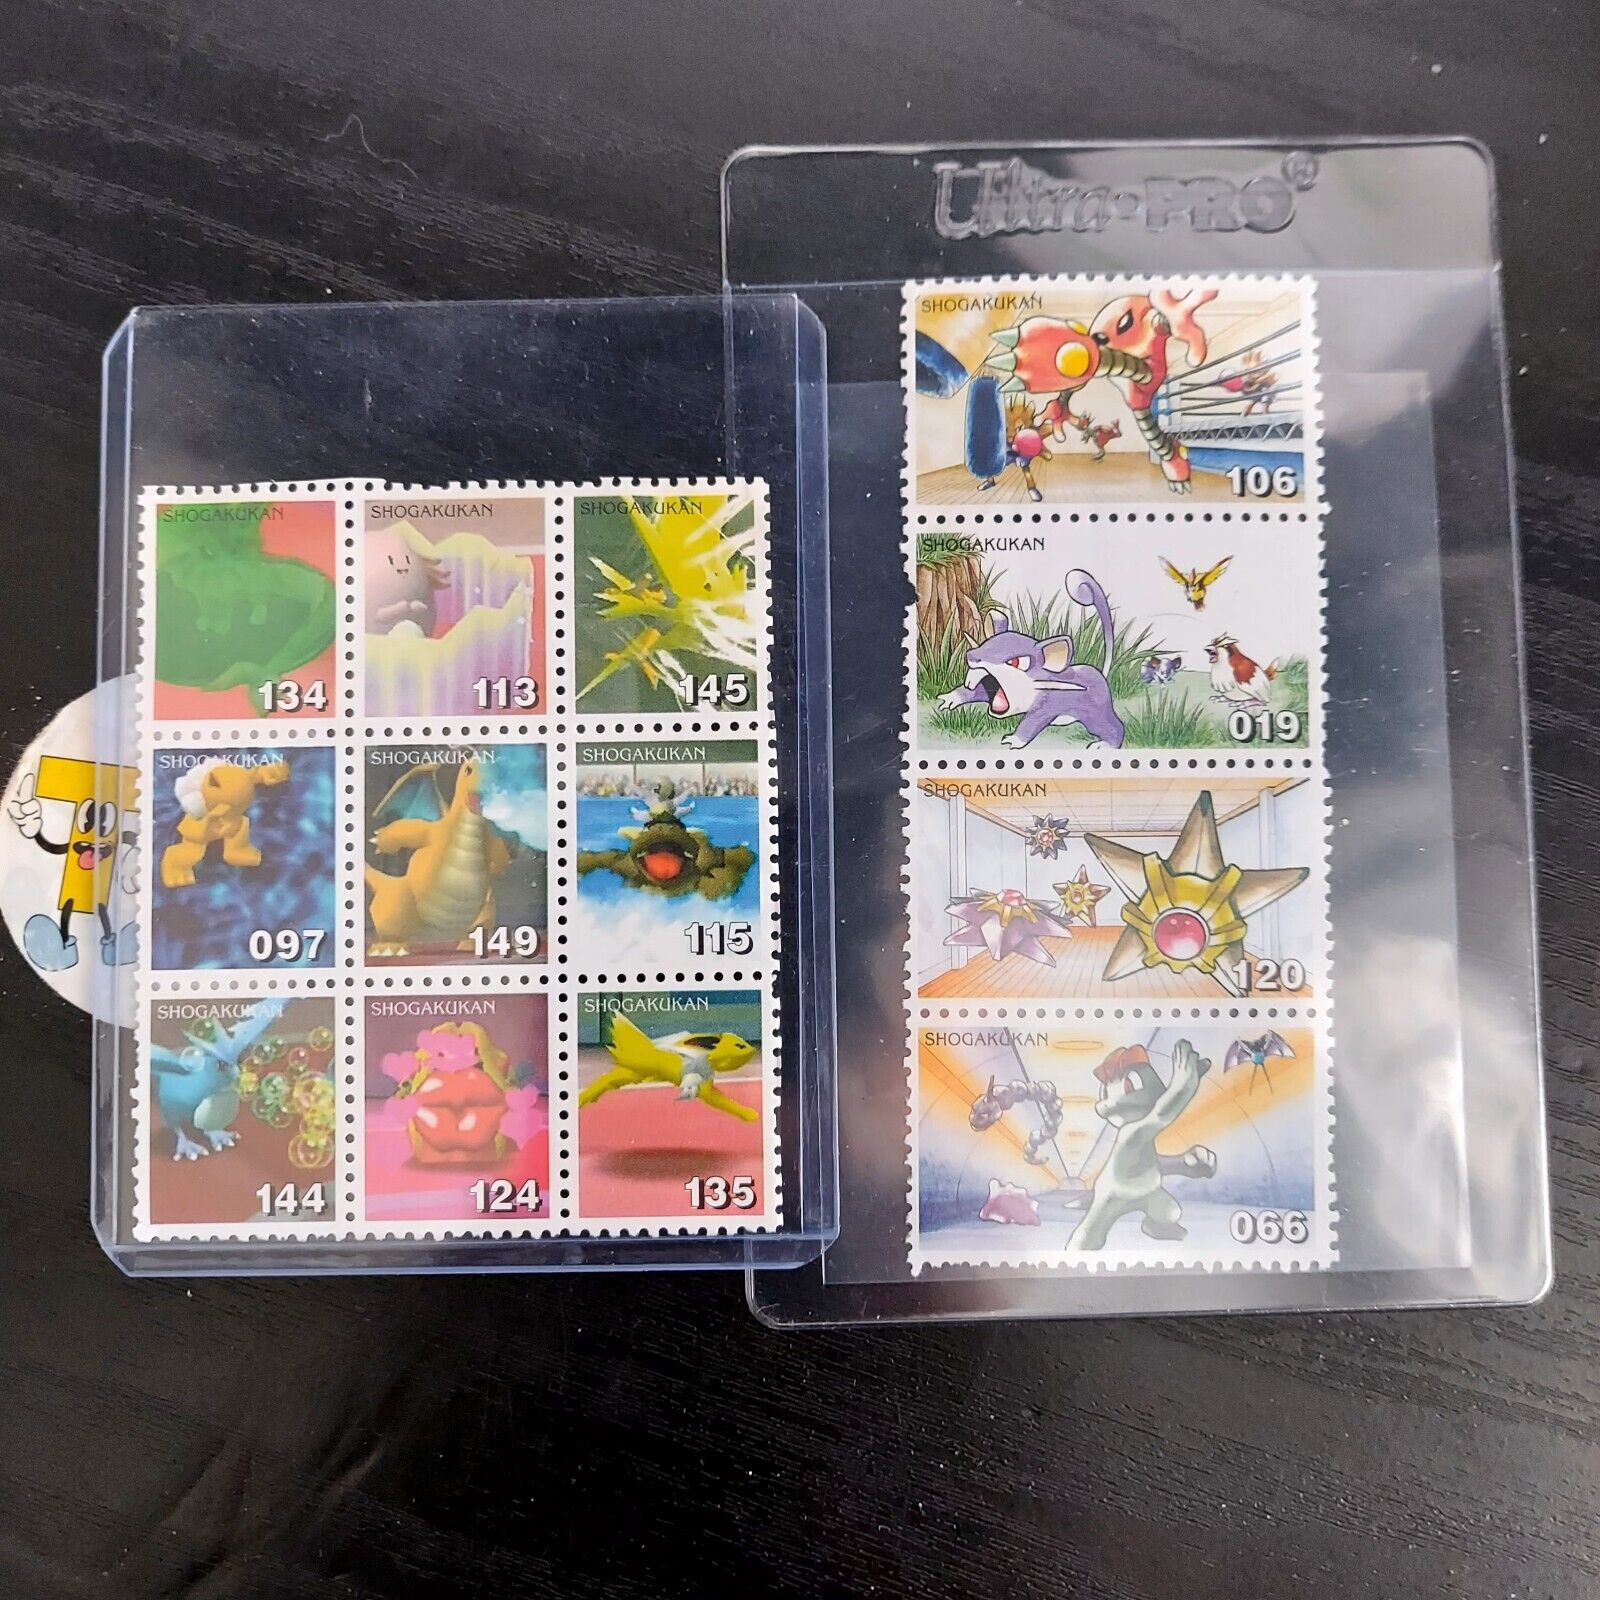 Pokemon Shogakukan uncut Stamps base set card Dragonite collection bundle lot